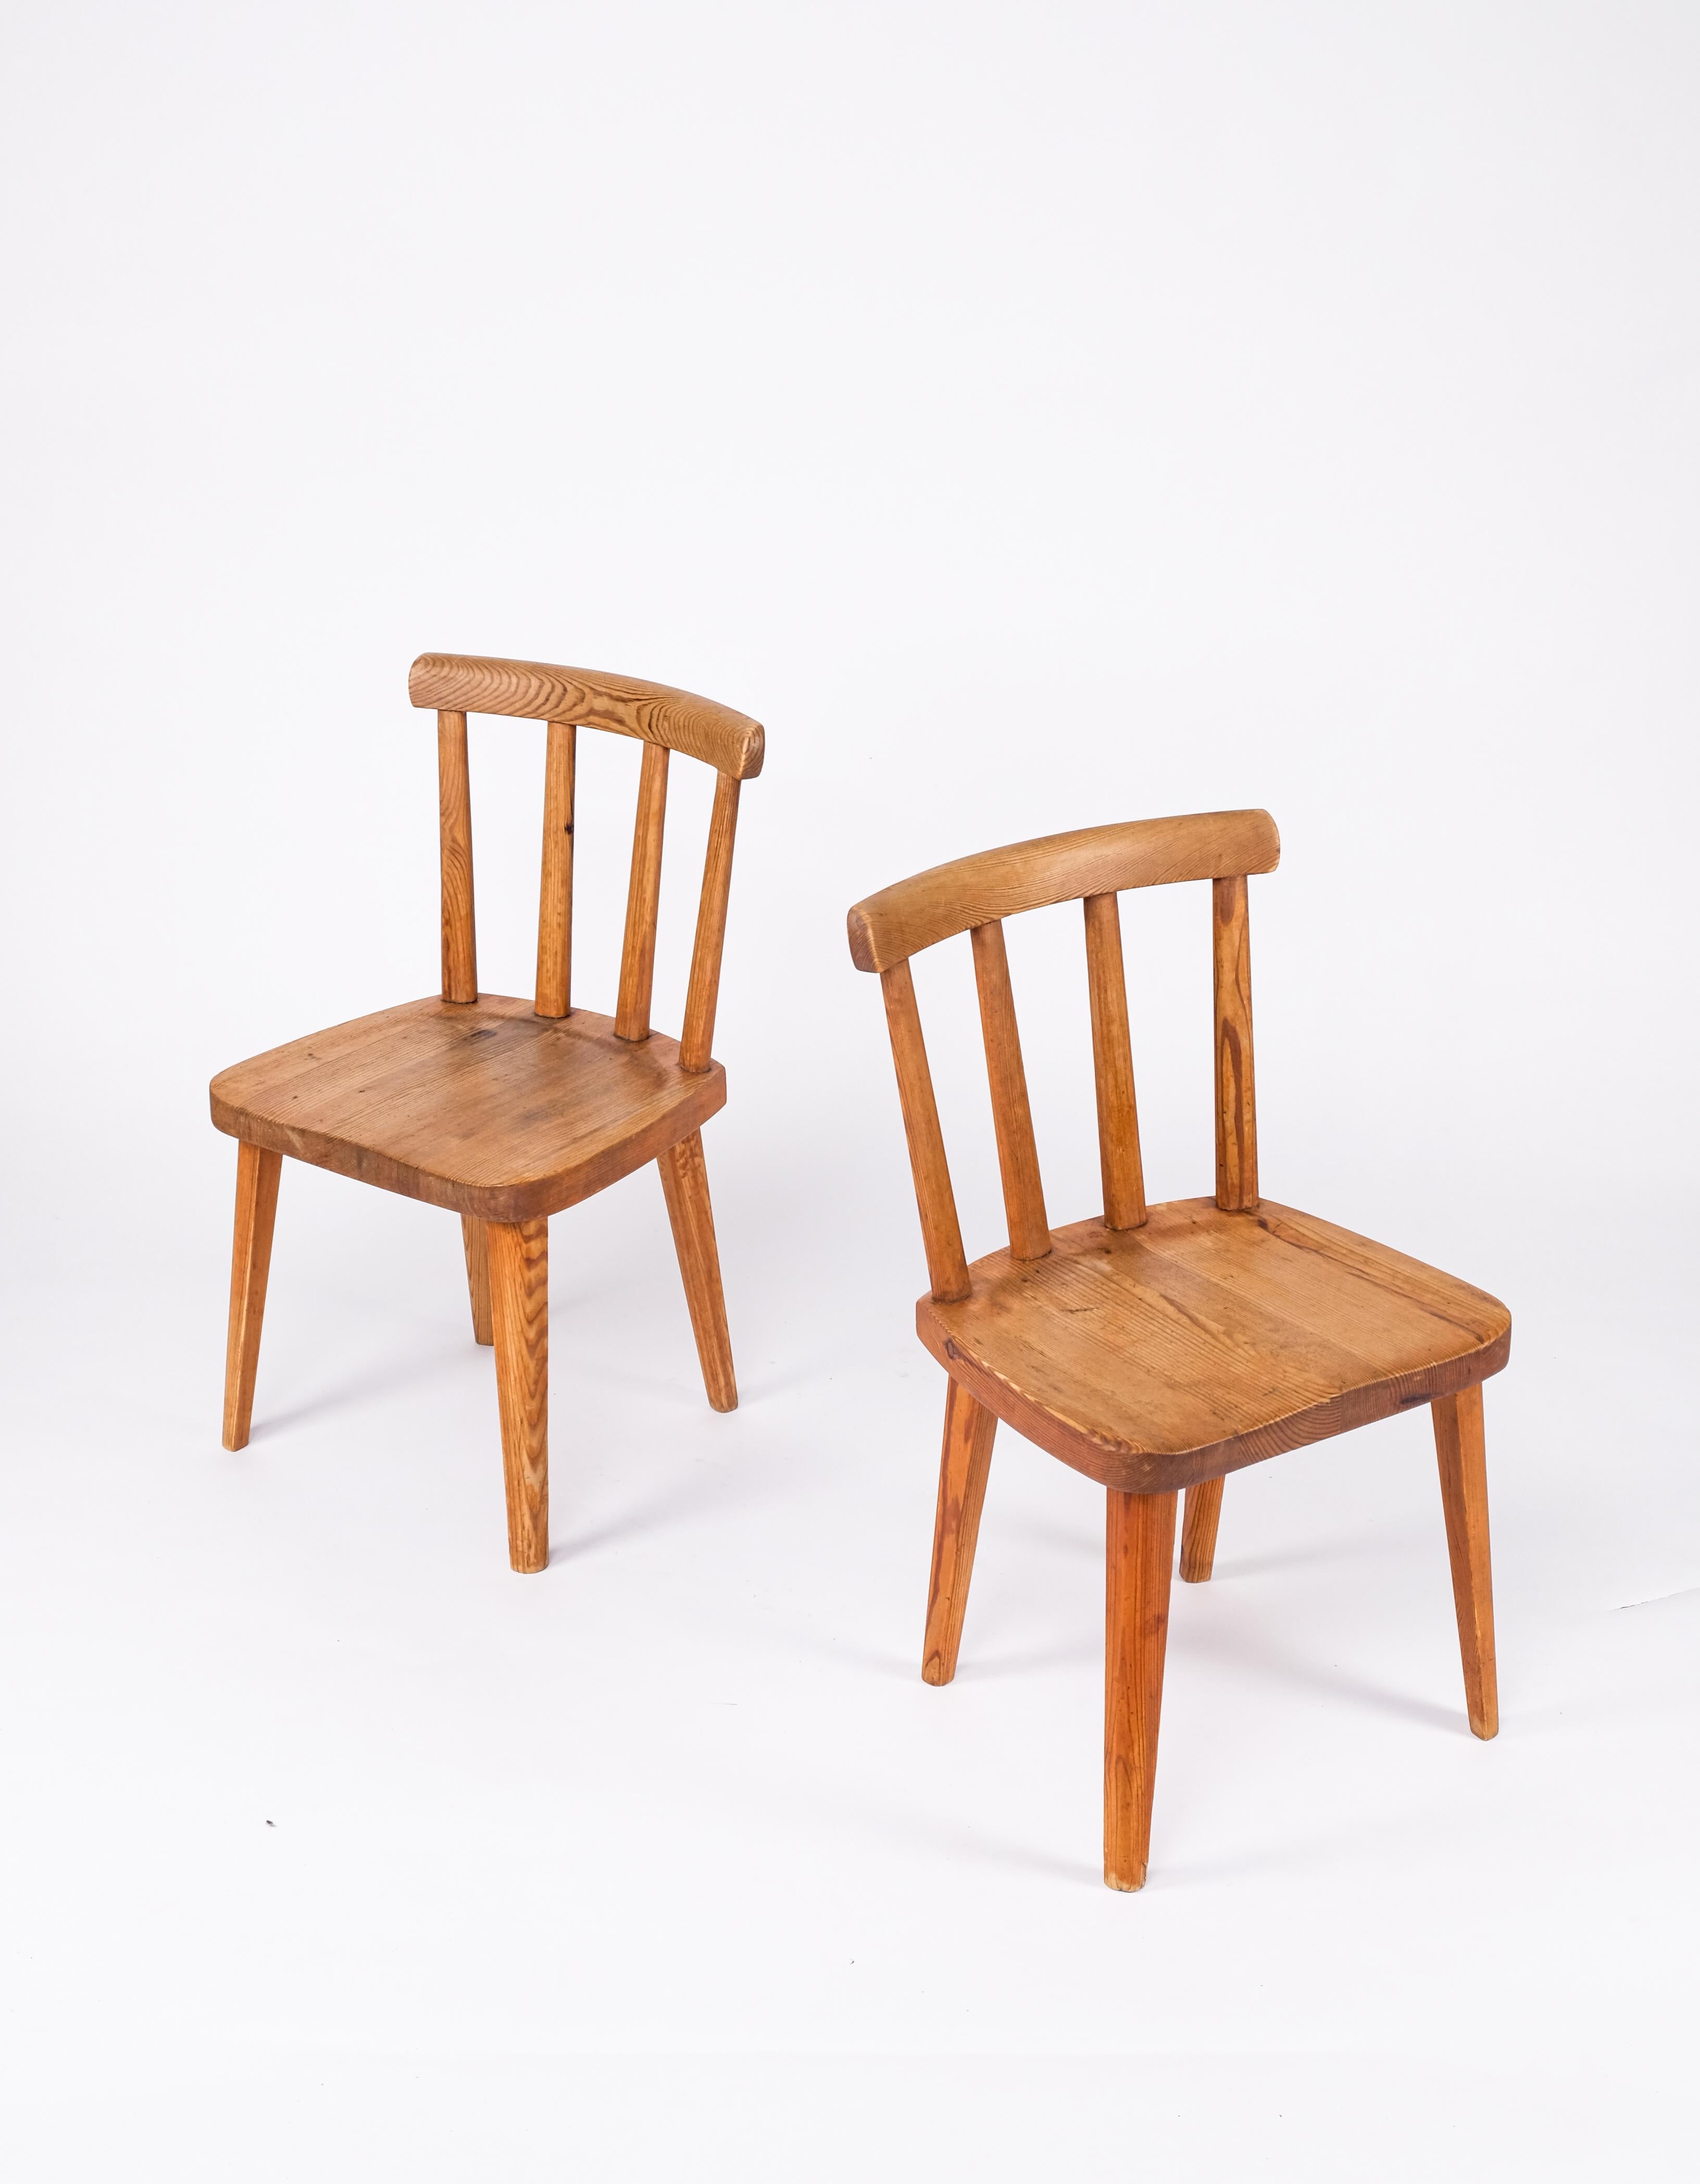 Pair of Utö/Uto pine chair by Axel-Einar Hjorth, Sweden, circa 1930s.
Produced by Nordiska Kompaniet.
  